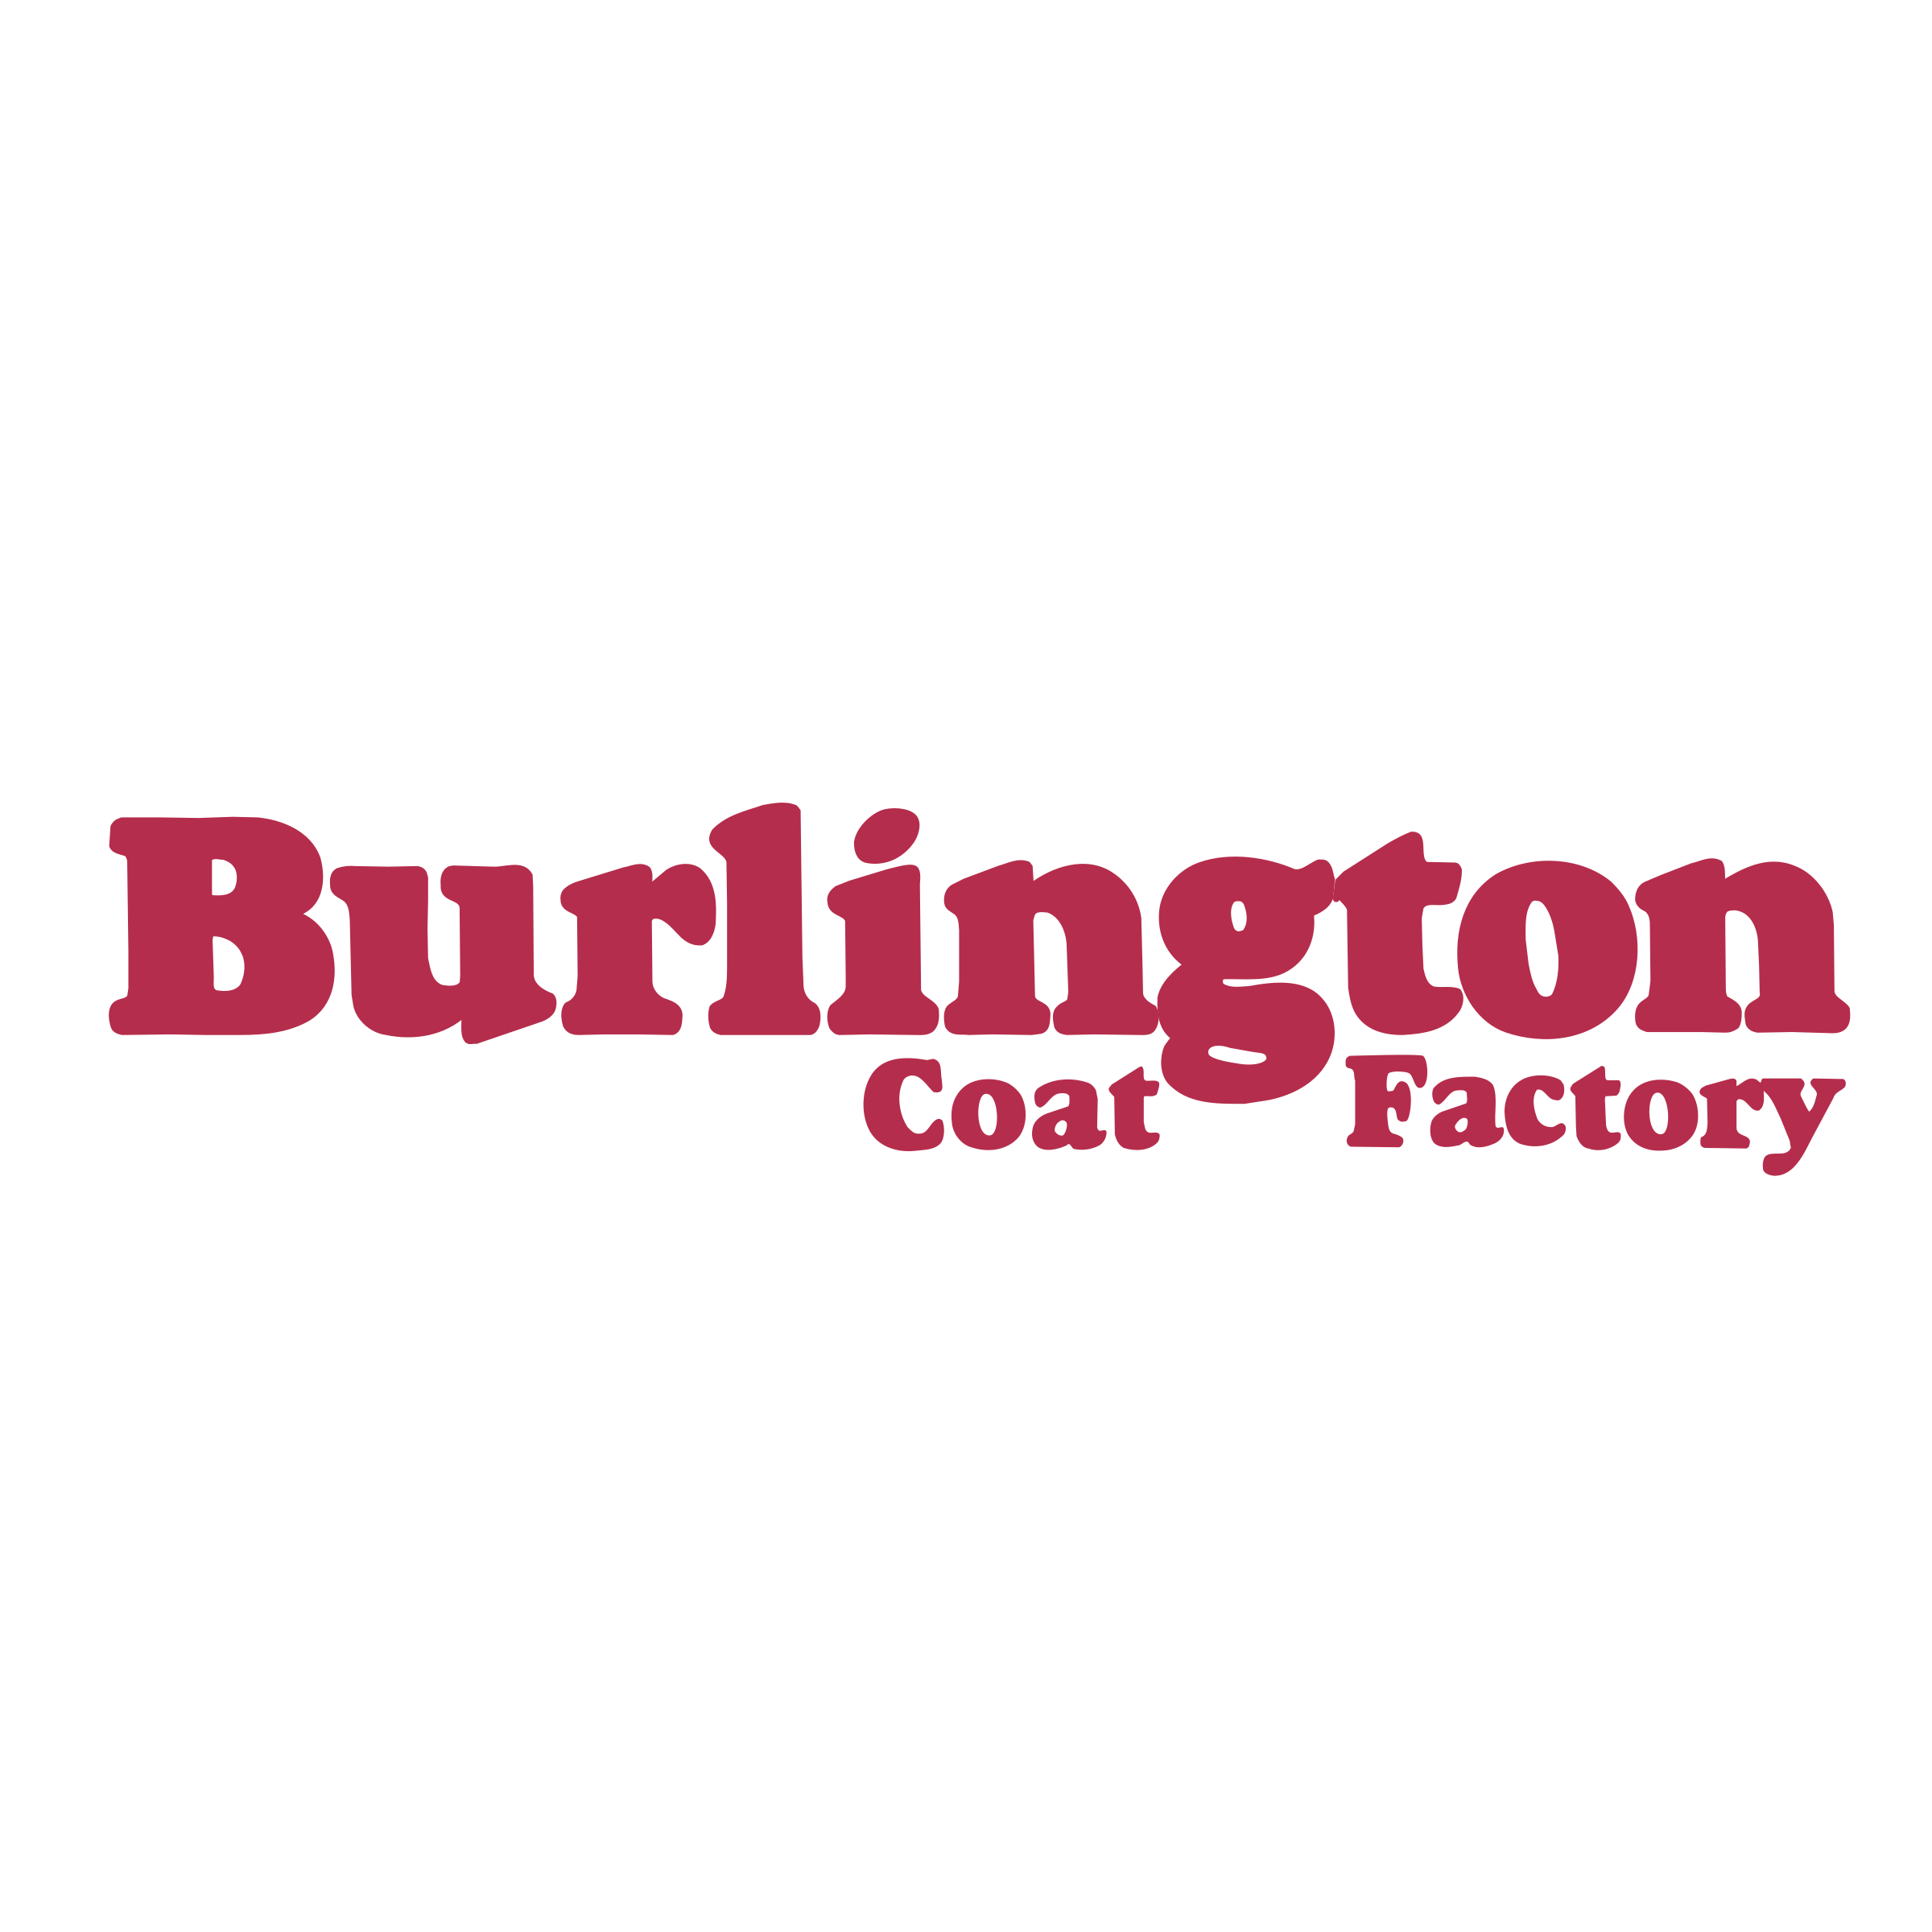 Burlington Logo - Burlington Coat Factory Logo PNG Transparent & SVG Vector